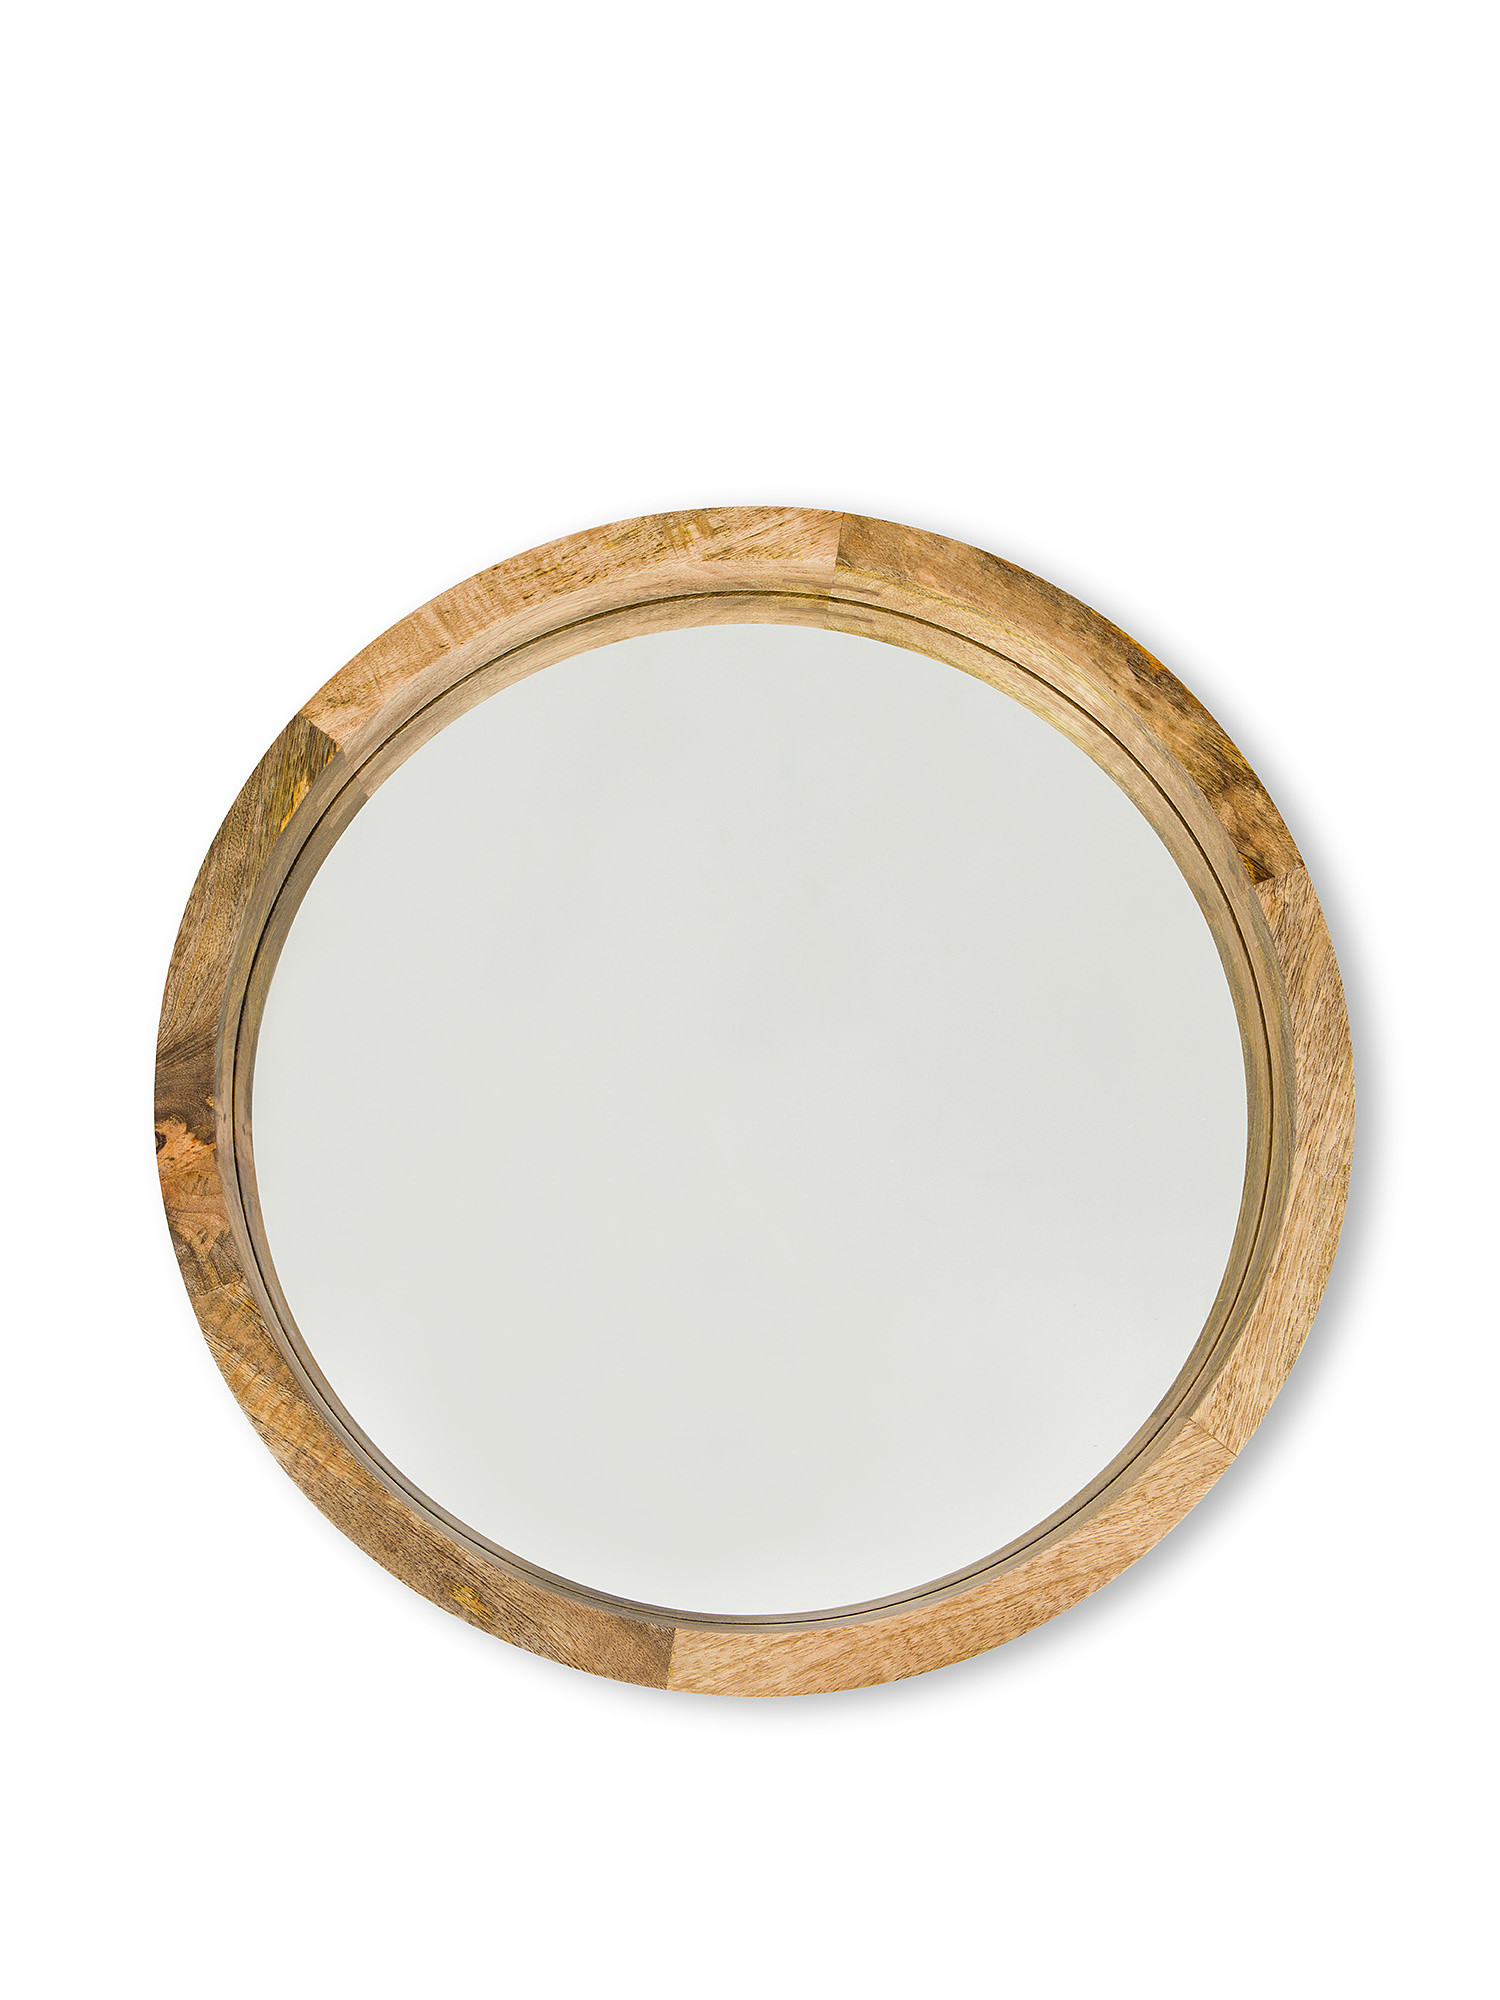 Specchio cornice in legno, Naturale, large image number 0